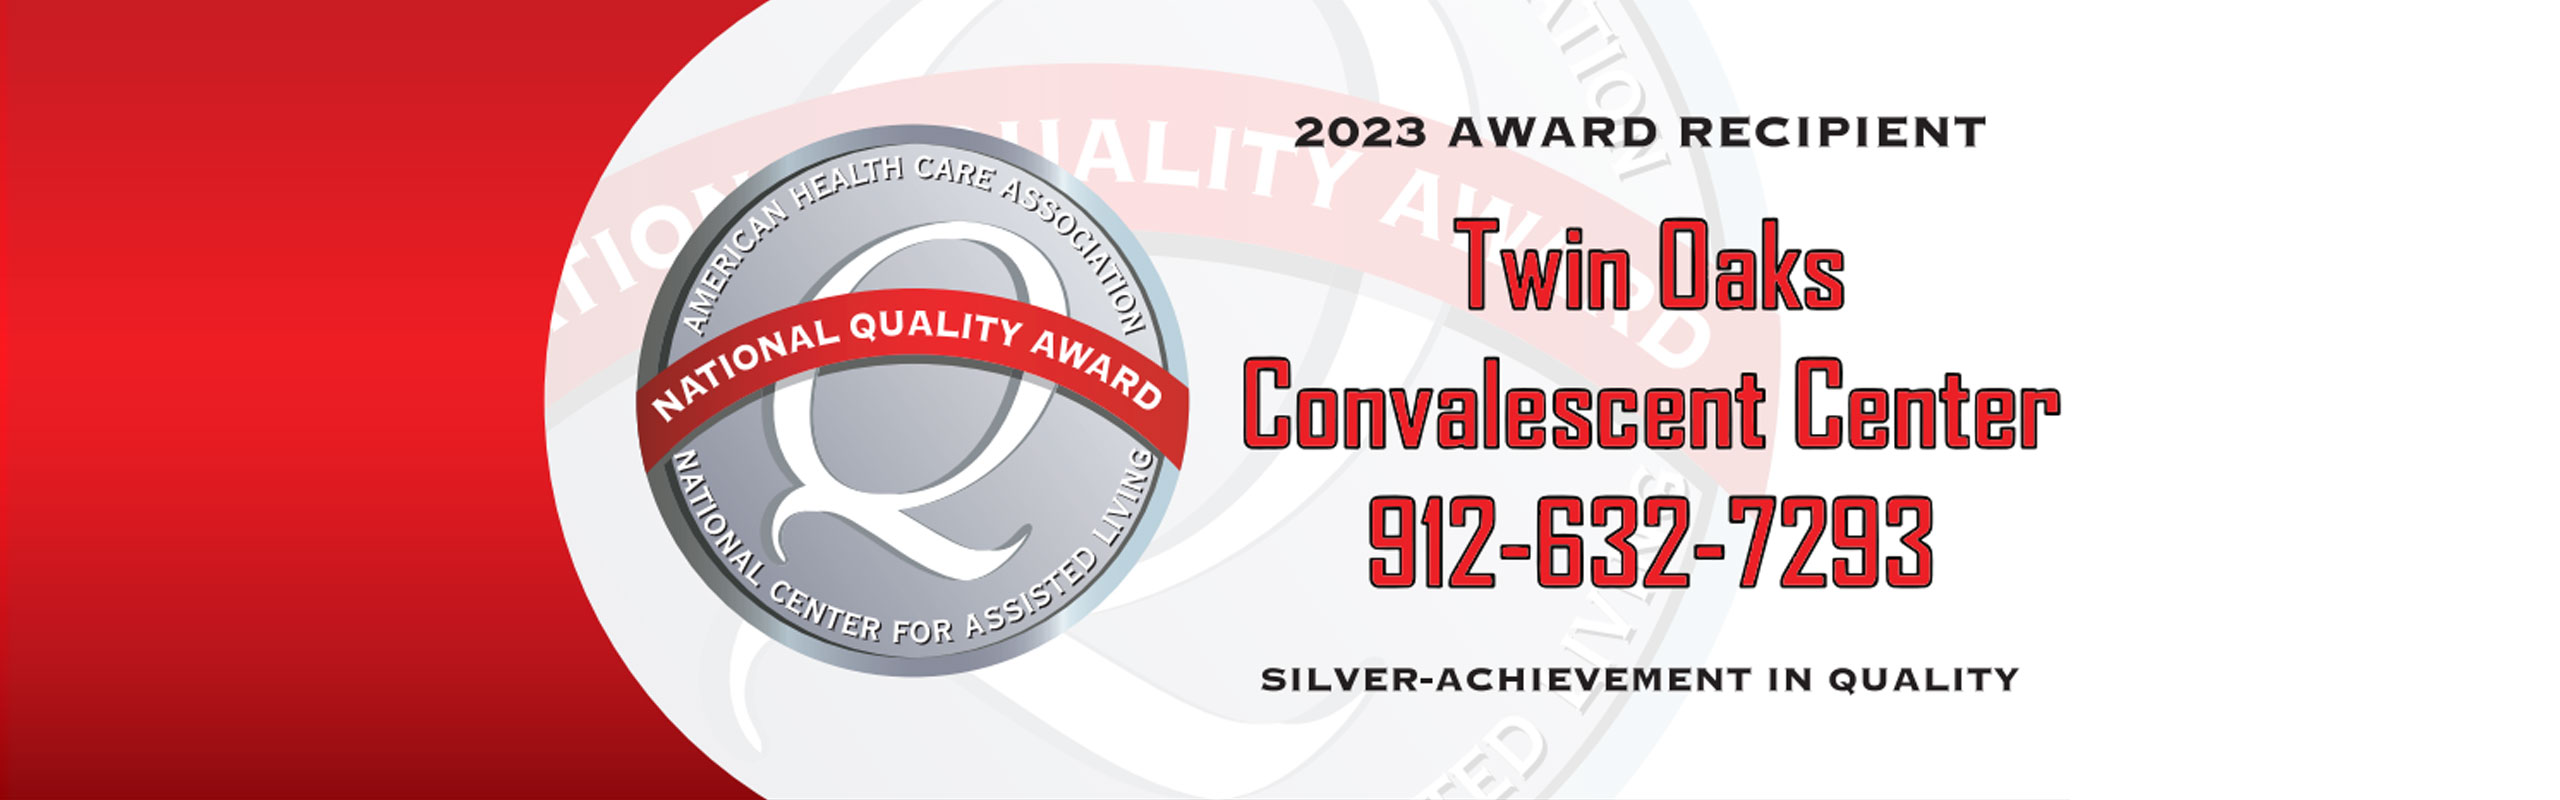 2023 Award Recipient 

Twin Oaks Convalescent Center
912-632-7293